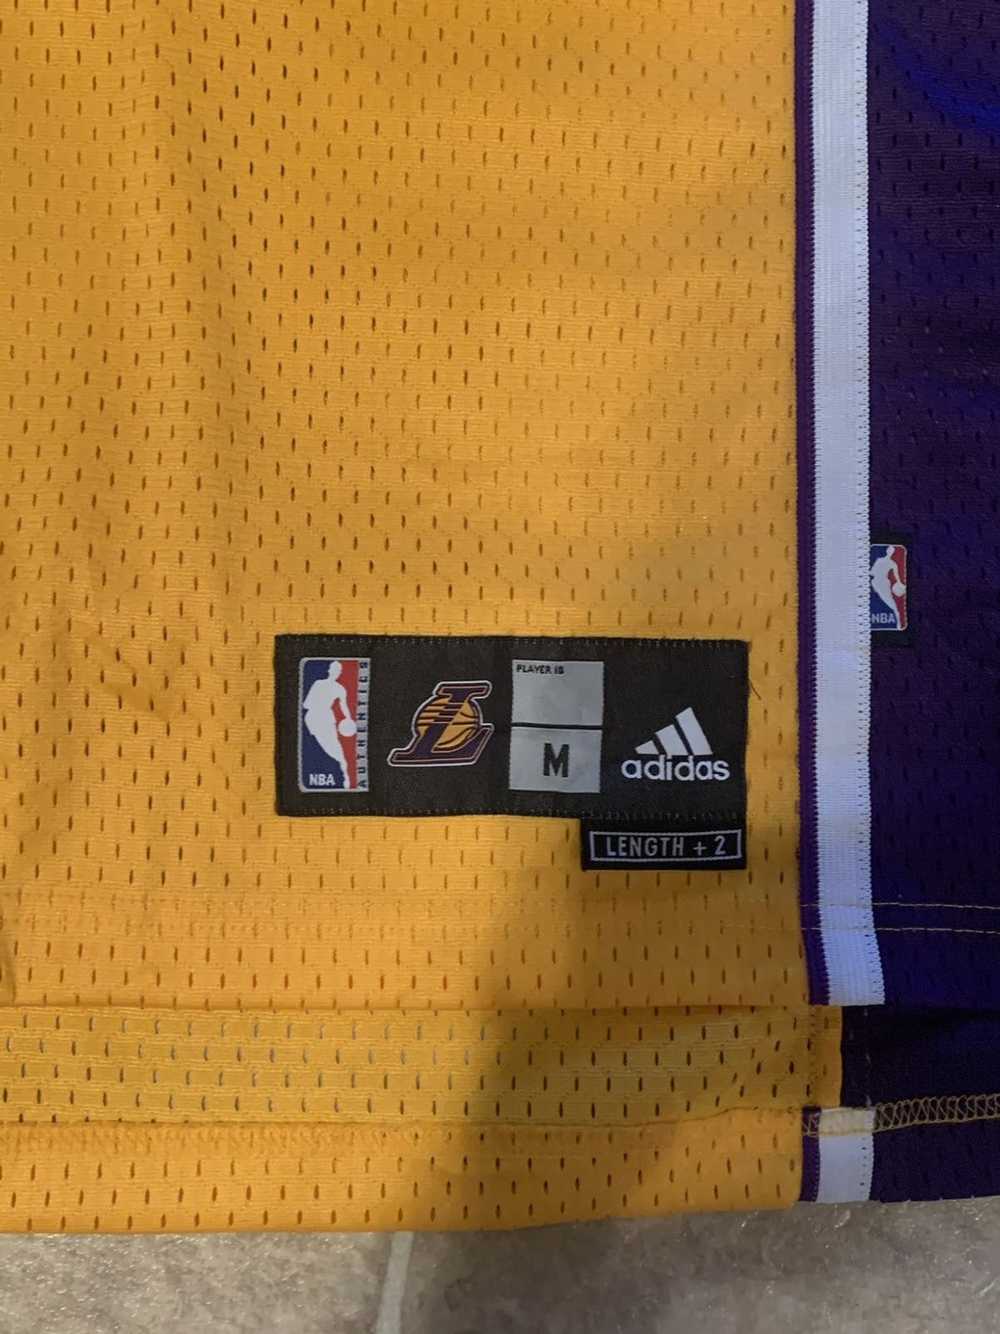 Kobe Bryant Los Angeles Lakers adidas Chase Fashion Replica Jersey - White